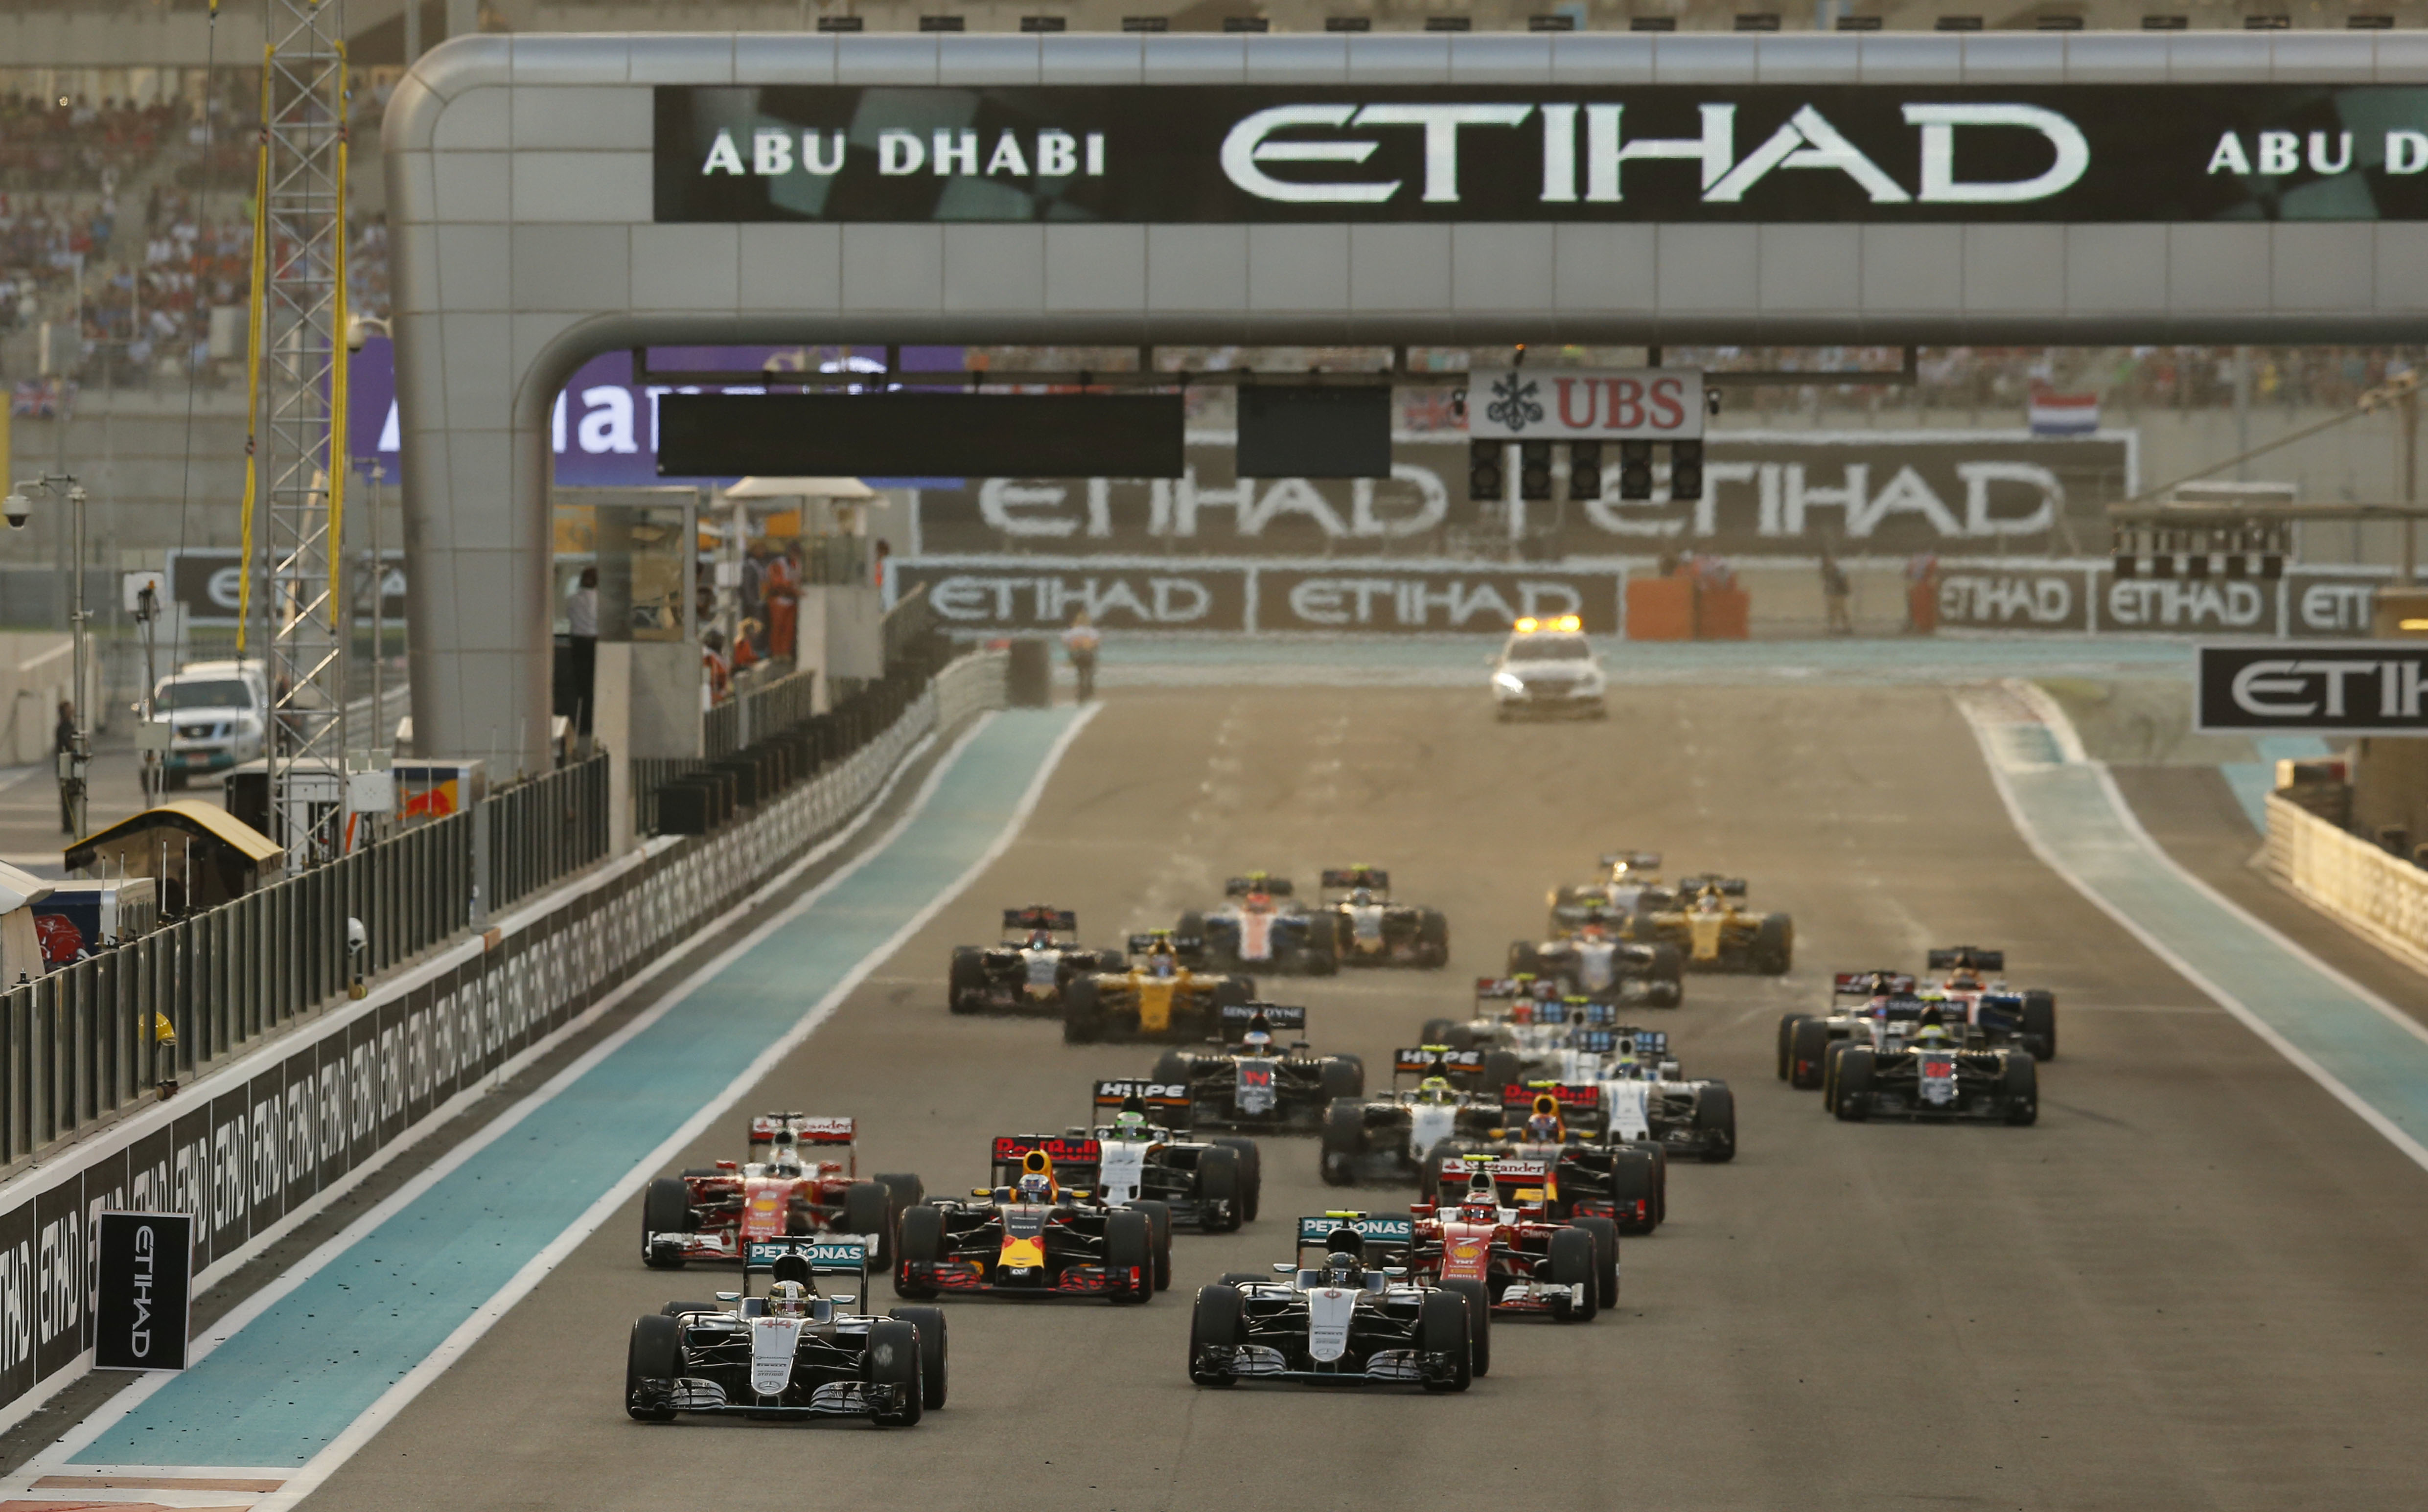 Formel 1 - MERCEDES AMG PETRONAS, Großer Preis von Abu Dhabi 2016. Lewis Hamilton, Nico Rosberg ;

Formula One - MERCEDES AMG PETRONAS, Abu Dhabi GP 2016. Lewis Hamilton, Nico Rosberg;